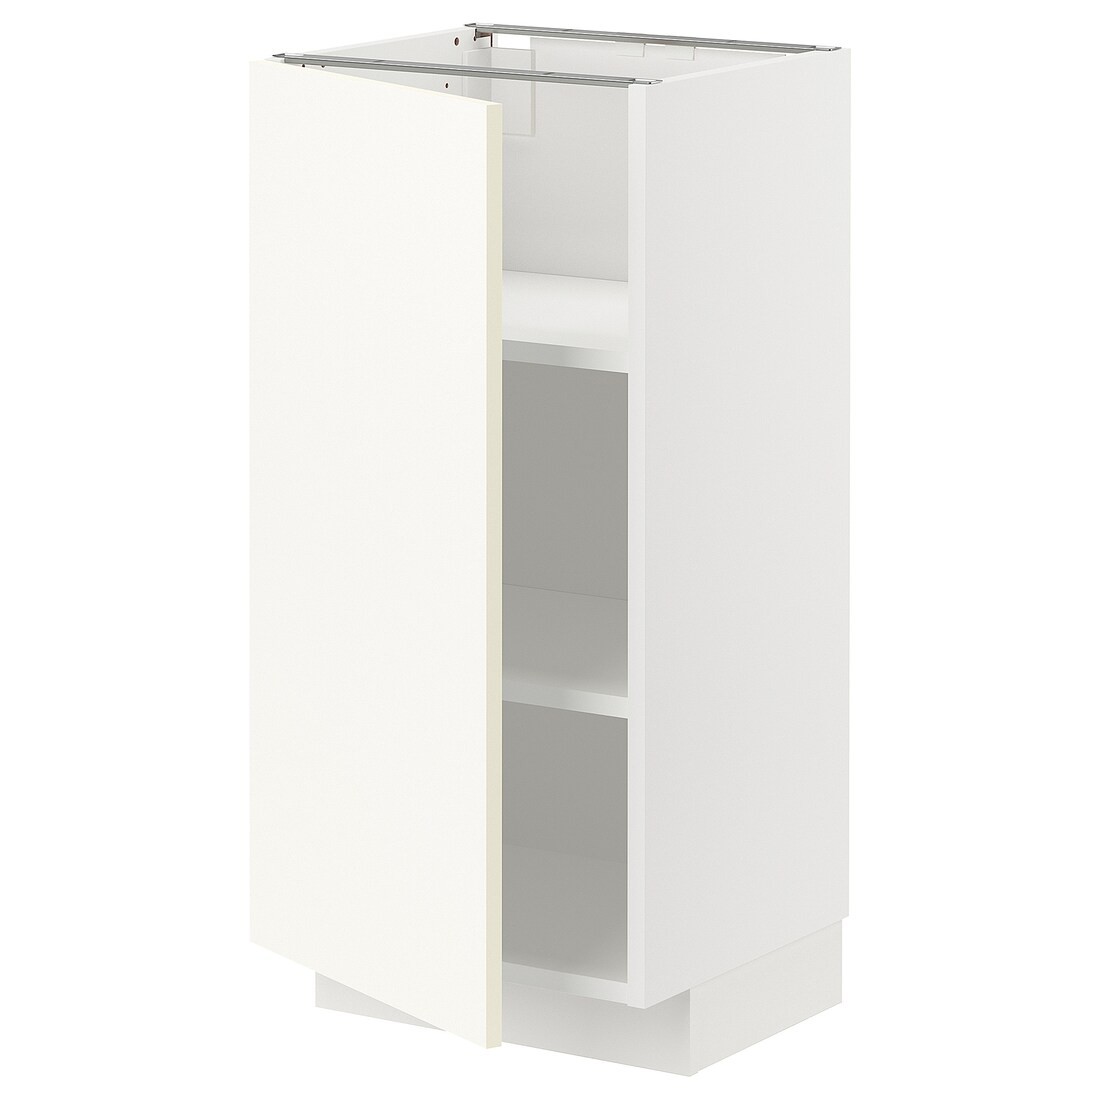 IKEA METOD МЕТОД Напольный шкаф с полками, белый / Vallstena белый 29507131 | 295.071.31